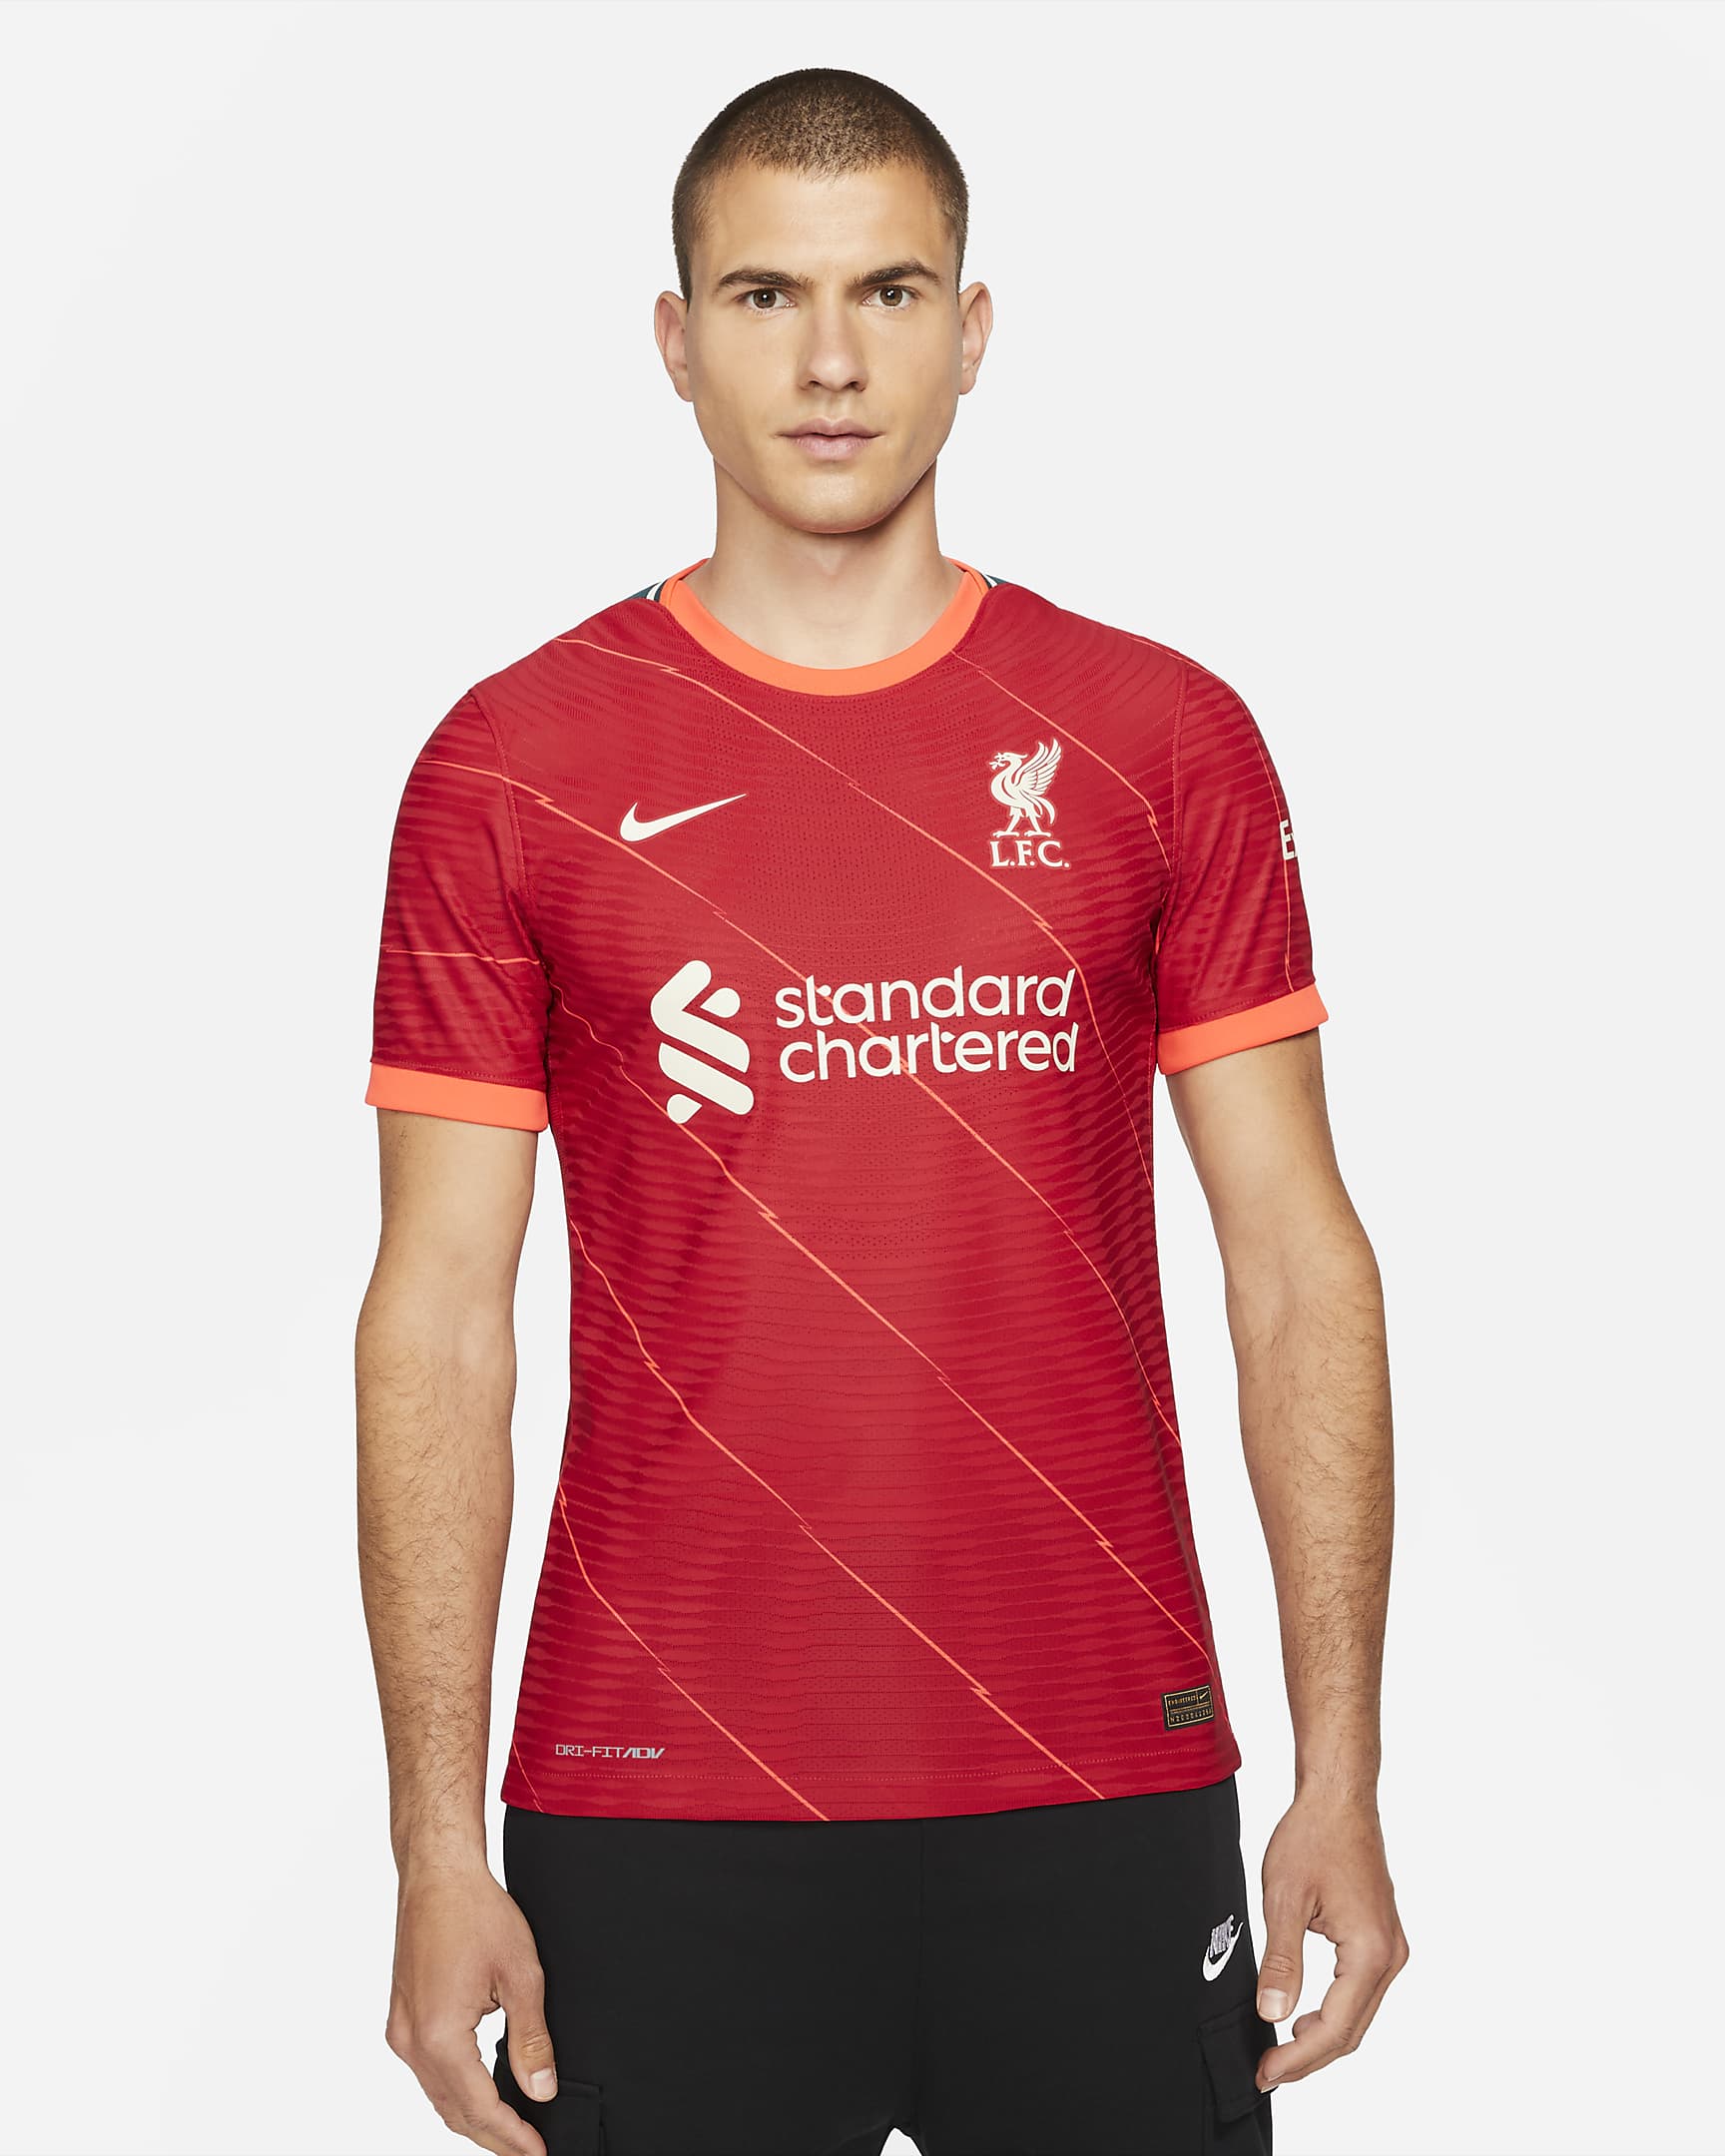 Liverpool FC 2021/22 Match Home Men's Nike Dri-FIT ADV Soccer Jersey ...